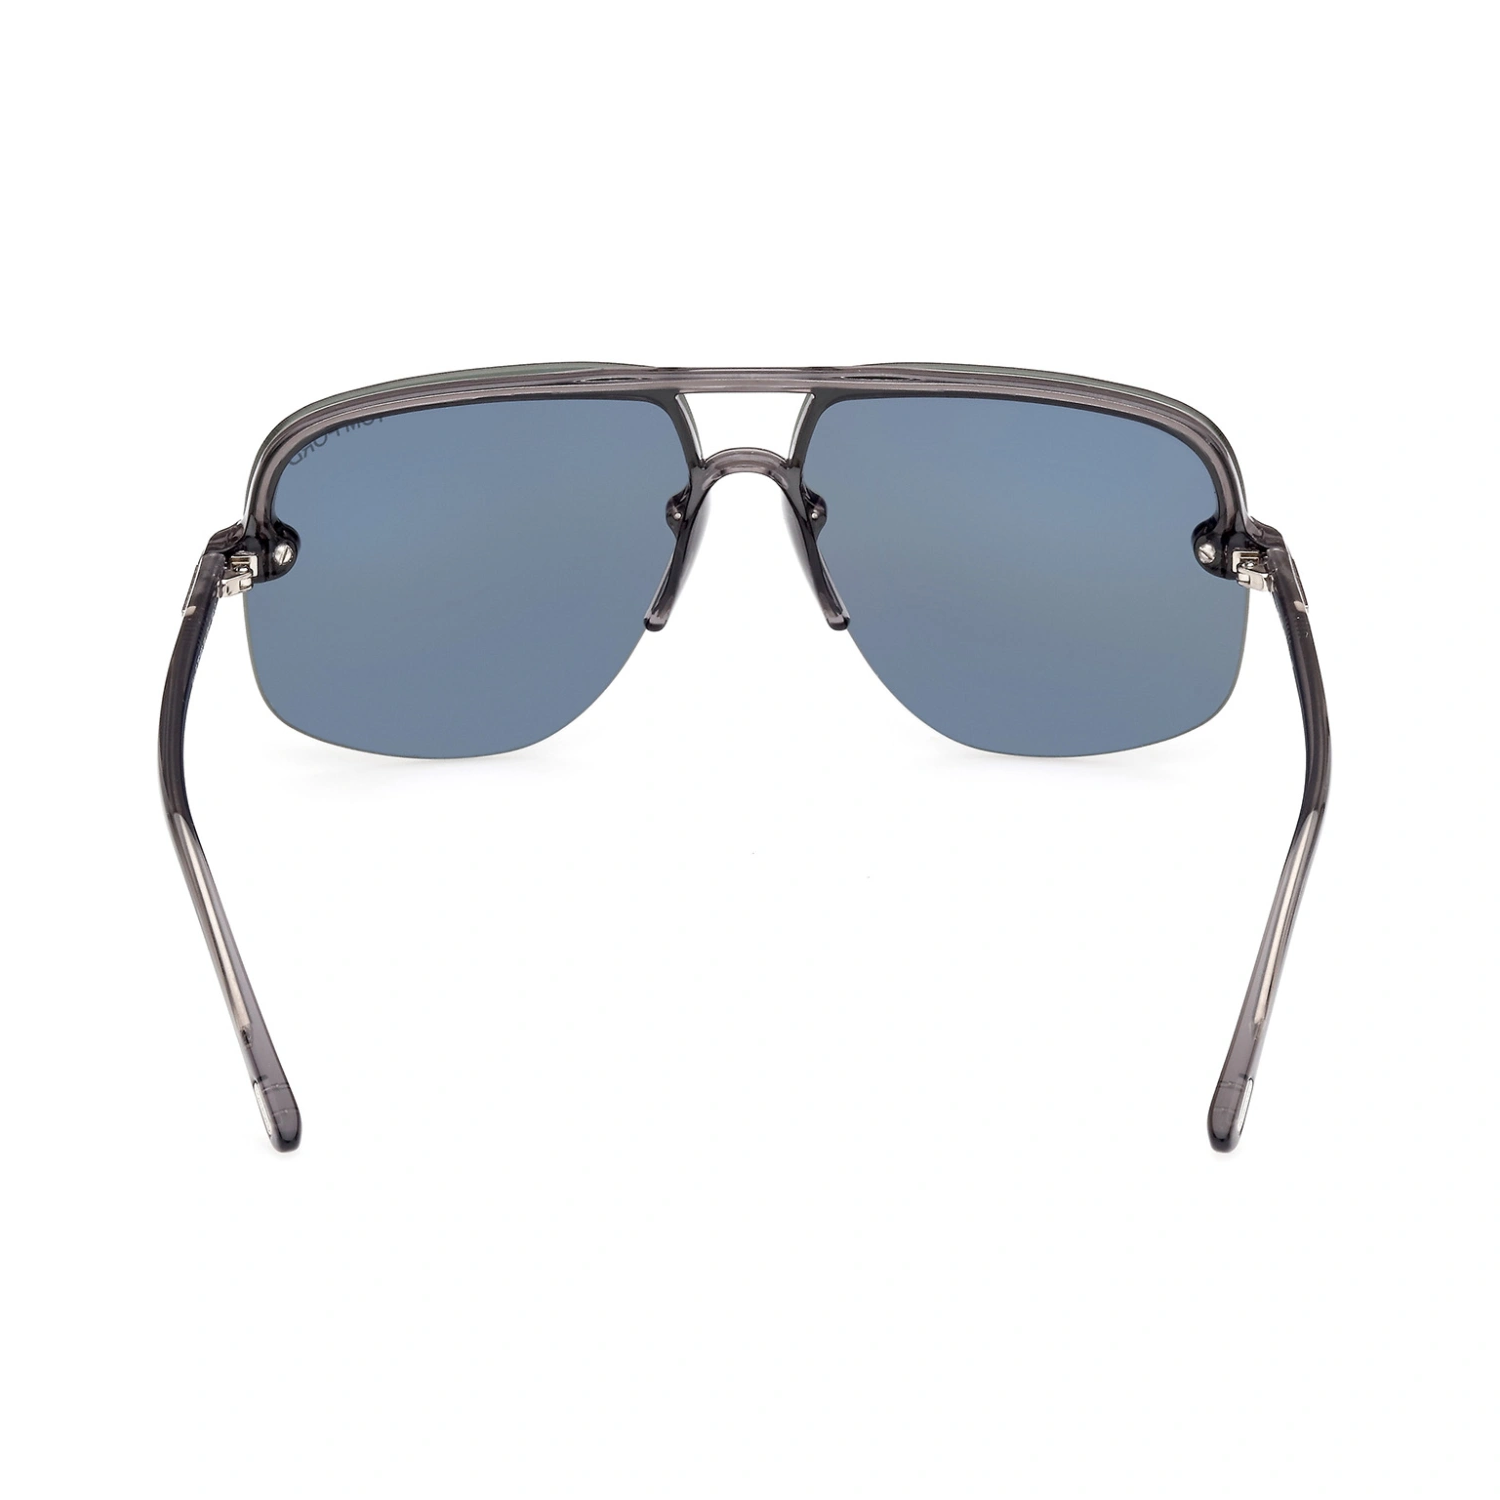 Tom Ford Sunglasses Tom Ford Sunglasses FT1003 20N 63mm Hugo Eyeglasses Eyewear UK USA Australia 